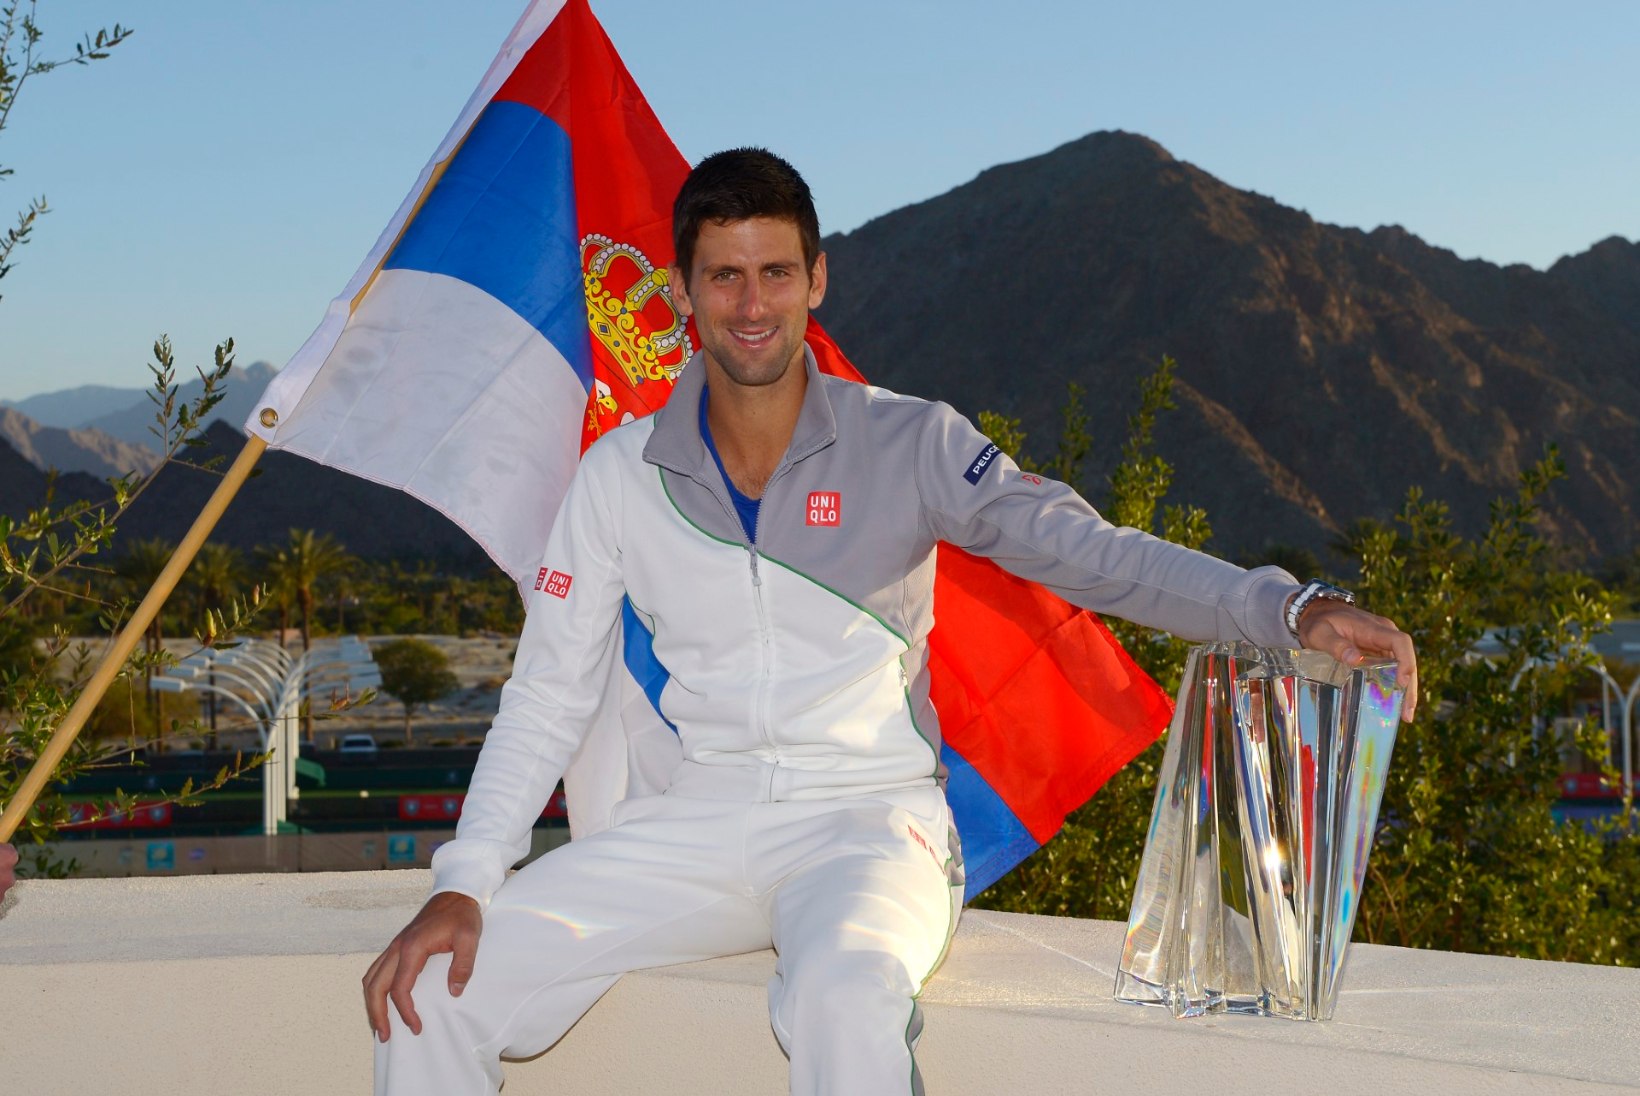 Indian Wellsi finaalis sai Djokovic jagu Federerist, naiste tiitel Pennettale